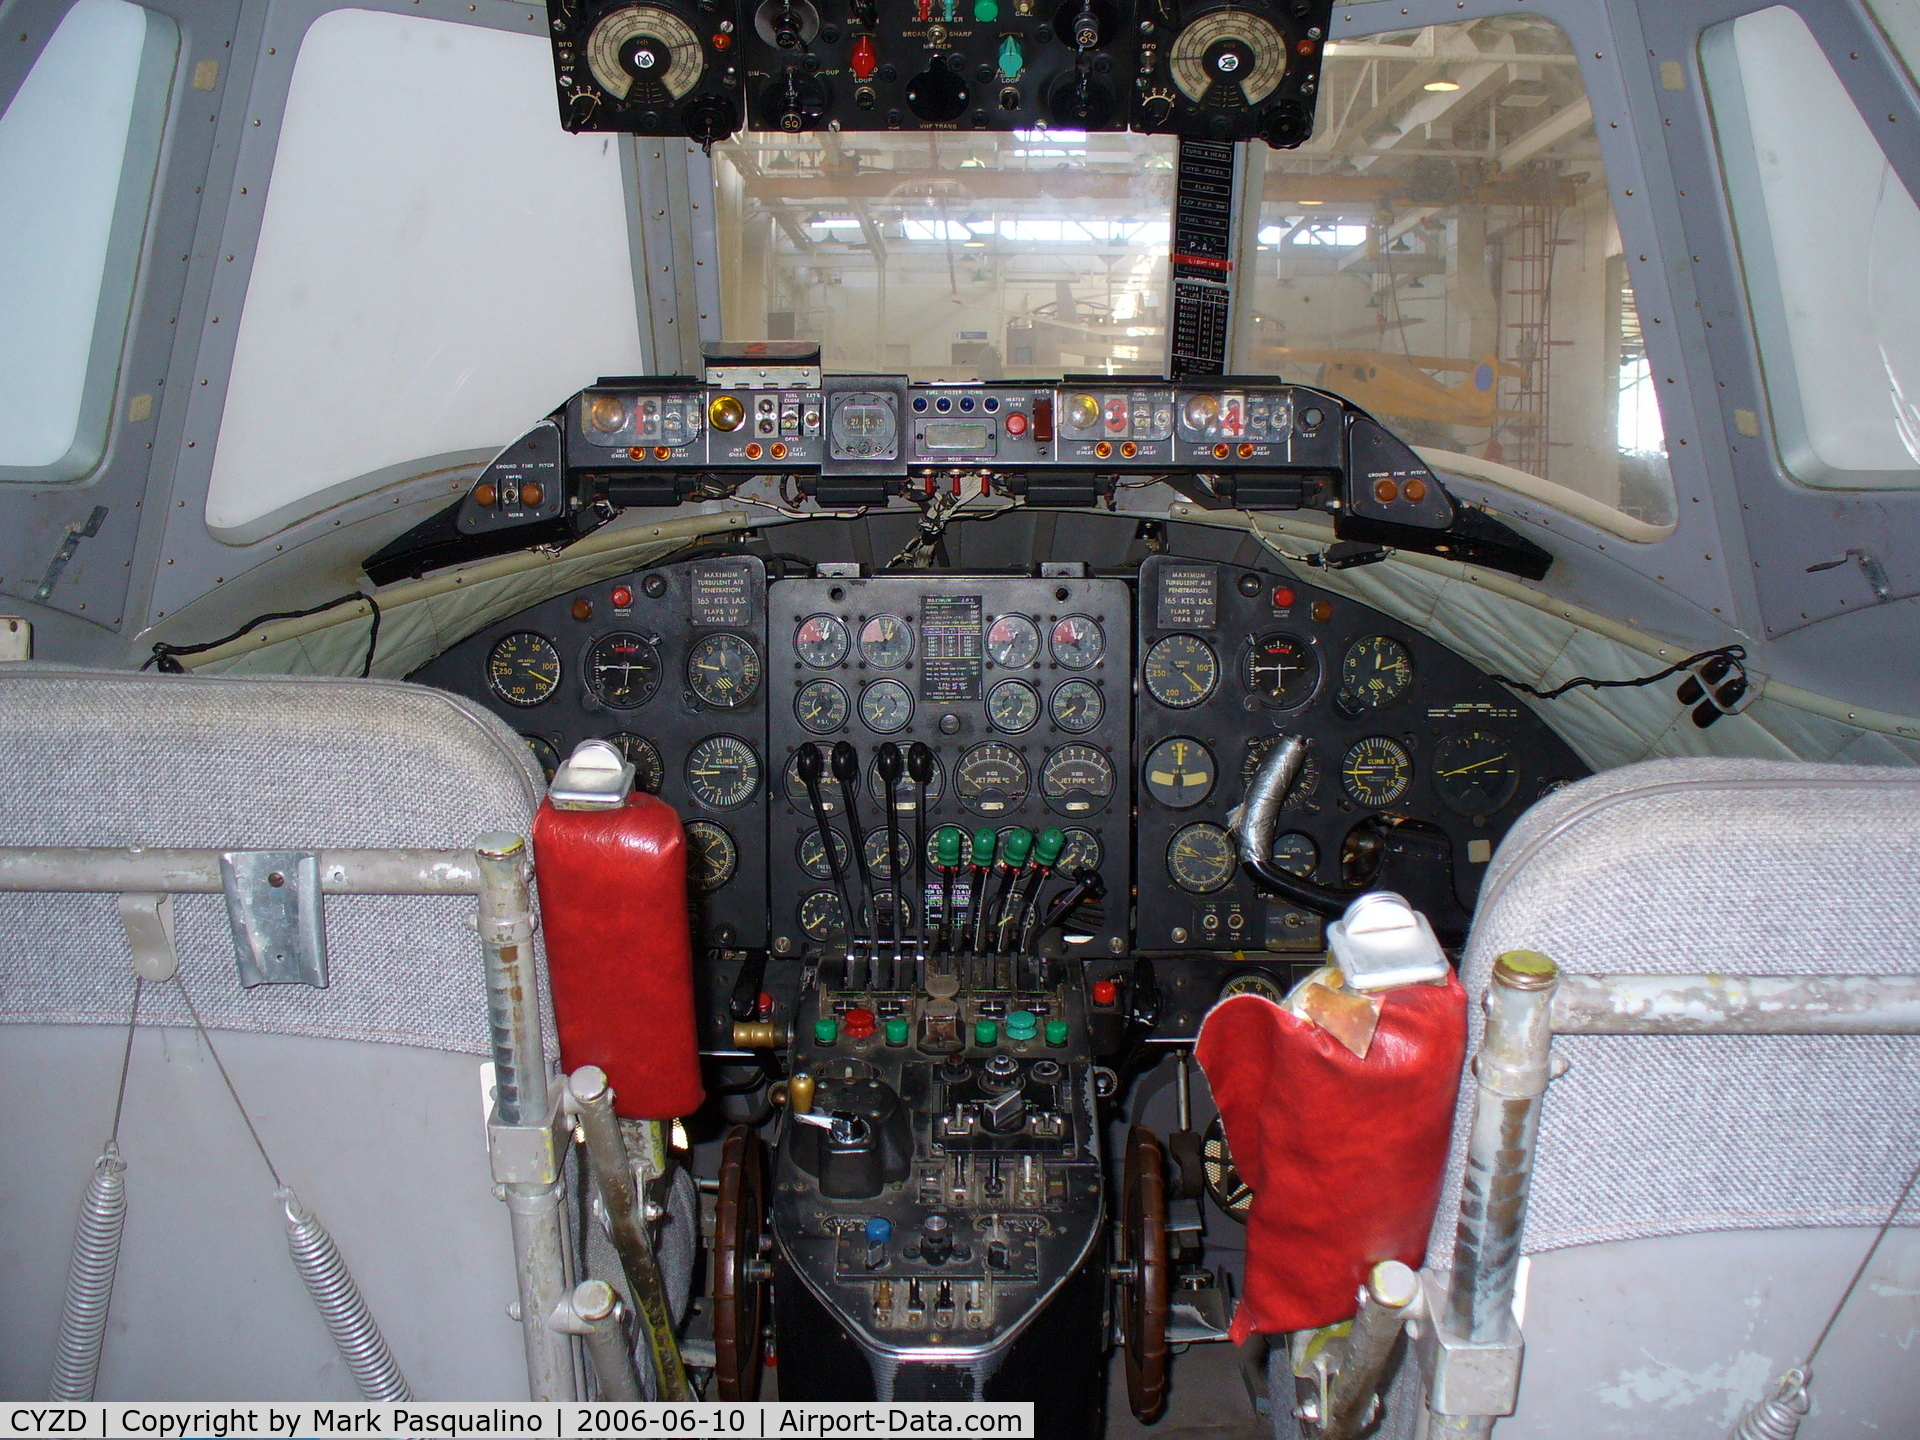 Toronto/Downsview Airport (Downsview Airport), Toronto, Ontario Canada (CYZD) - Viscount simulator at Toronto Aerospace Museum